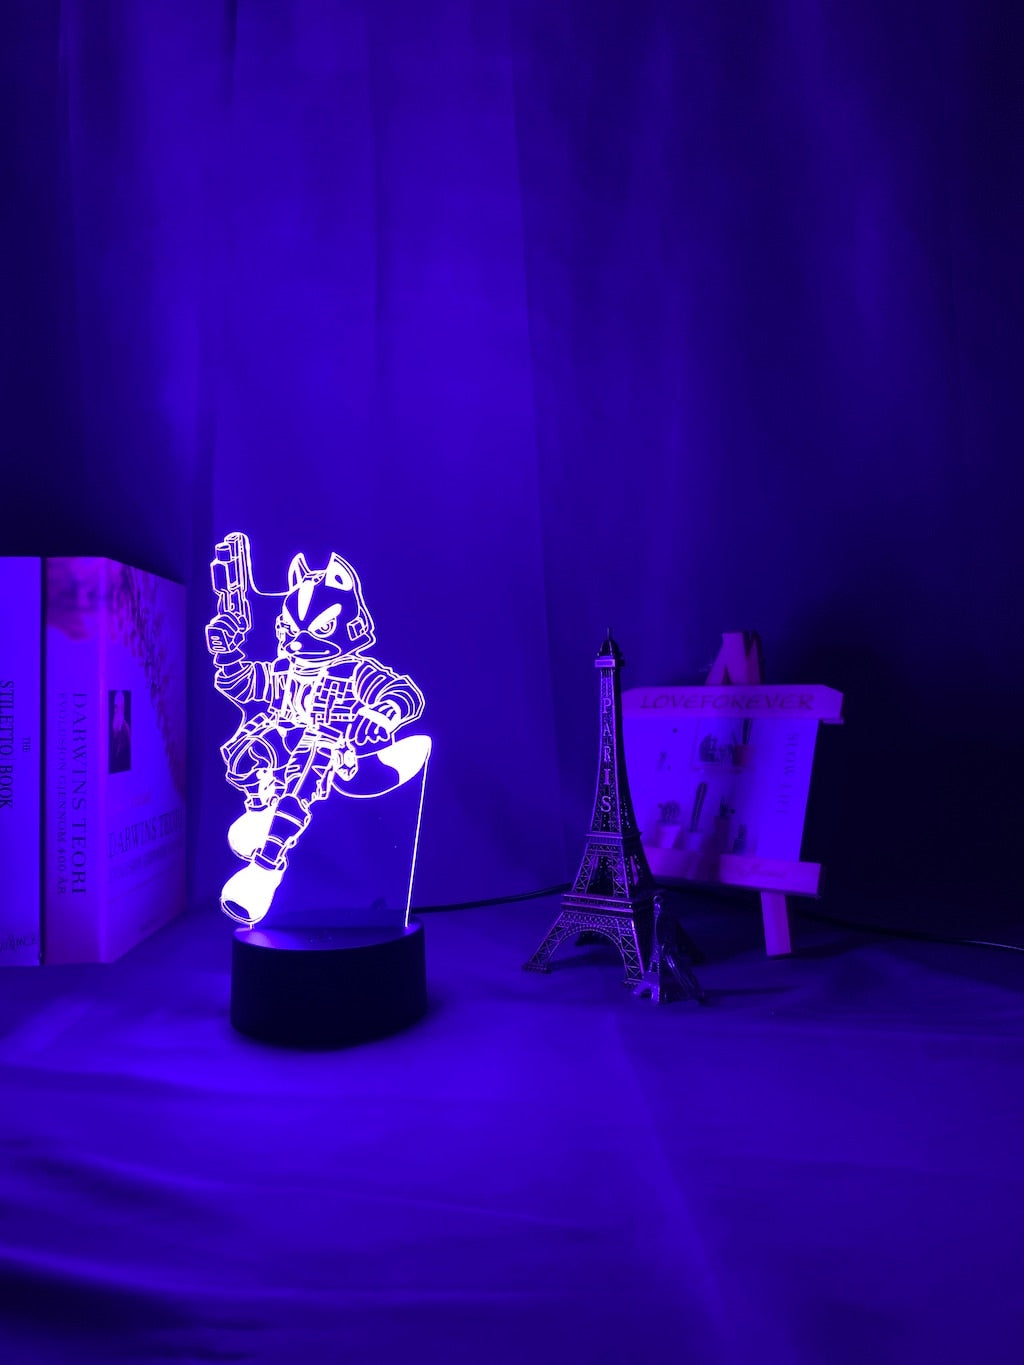 Starfox Nightlight iLightBox 3D™ Lamp